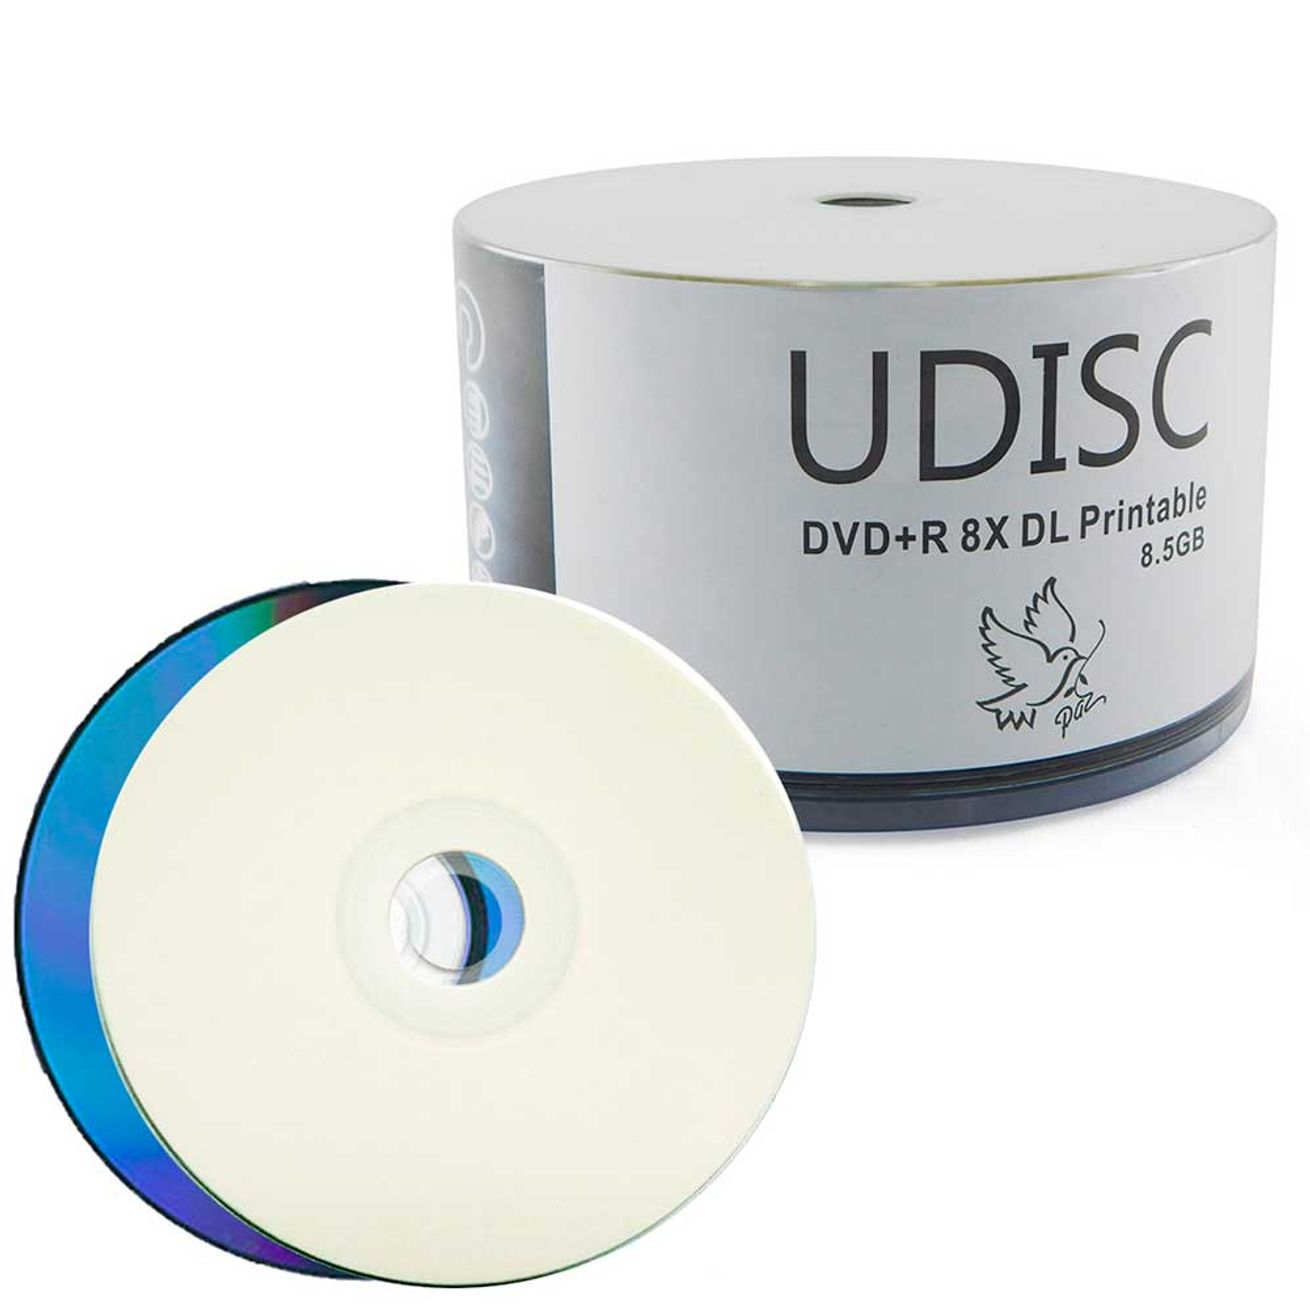 DVD+R Dual Layer Udisc Printable 8.5GB SOCD